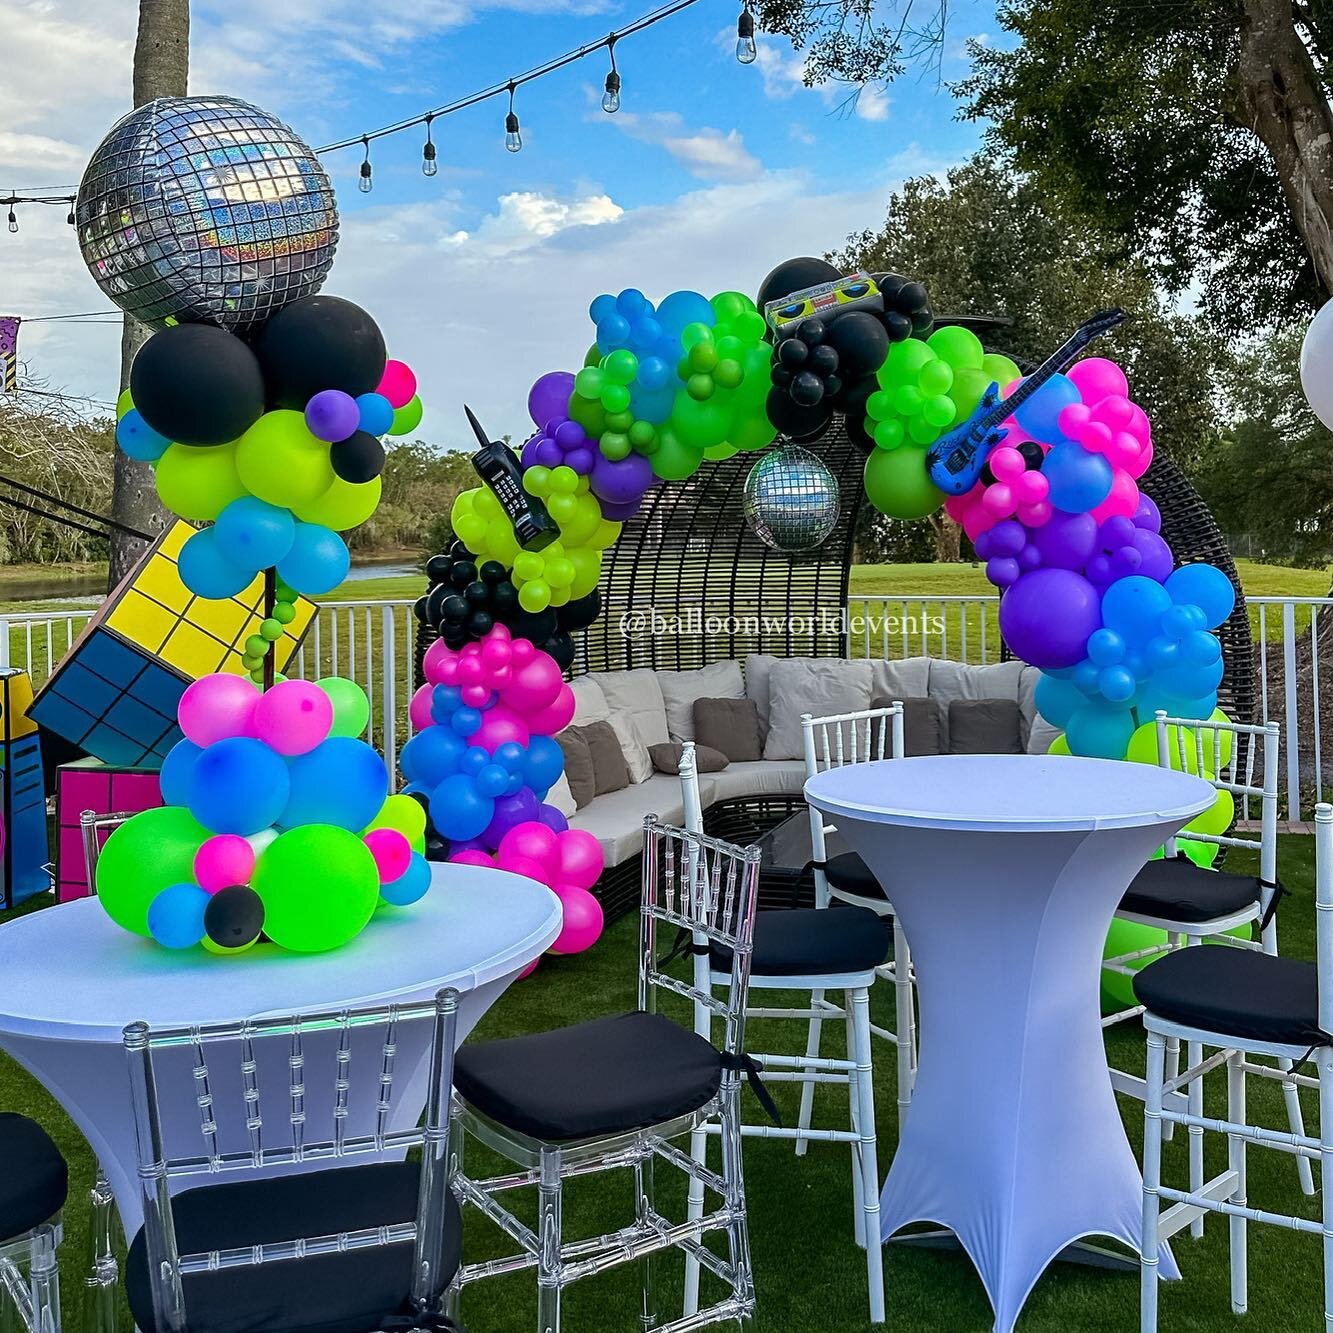 Neon balloon centerpieces and a neon organic balloon arch 🪩 
.
.
.
#neonballoons #discoballoons #neonballoonarch #ballooncenterpieces #browardballoons #southfloridaballoons #miamiballoons #parklandballoons #westonballoons #fortlauderdaleballoons